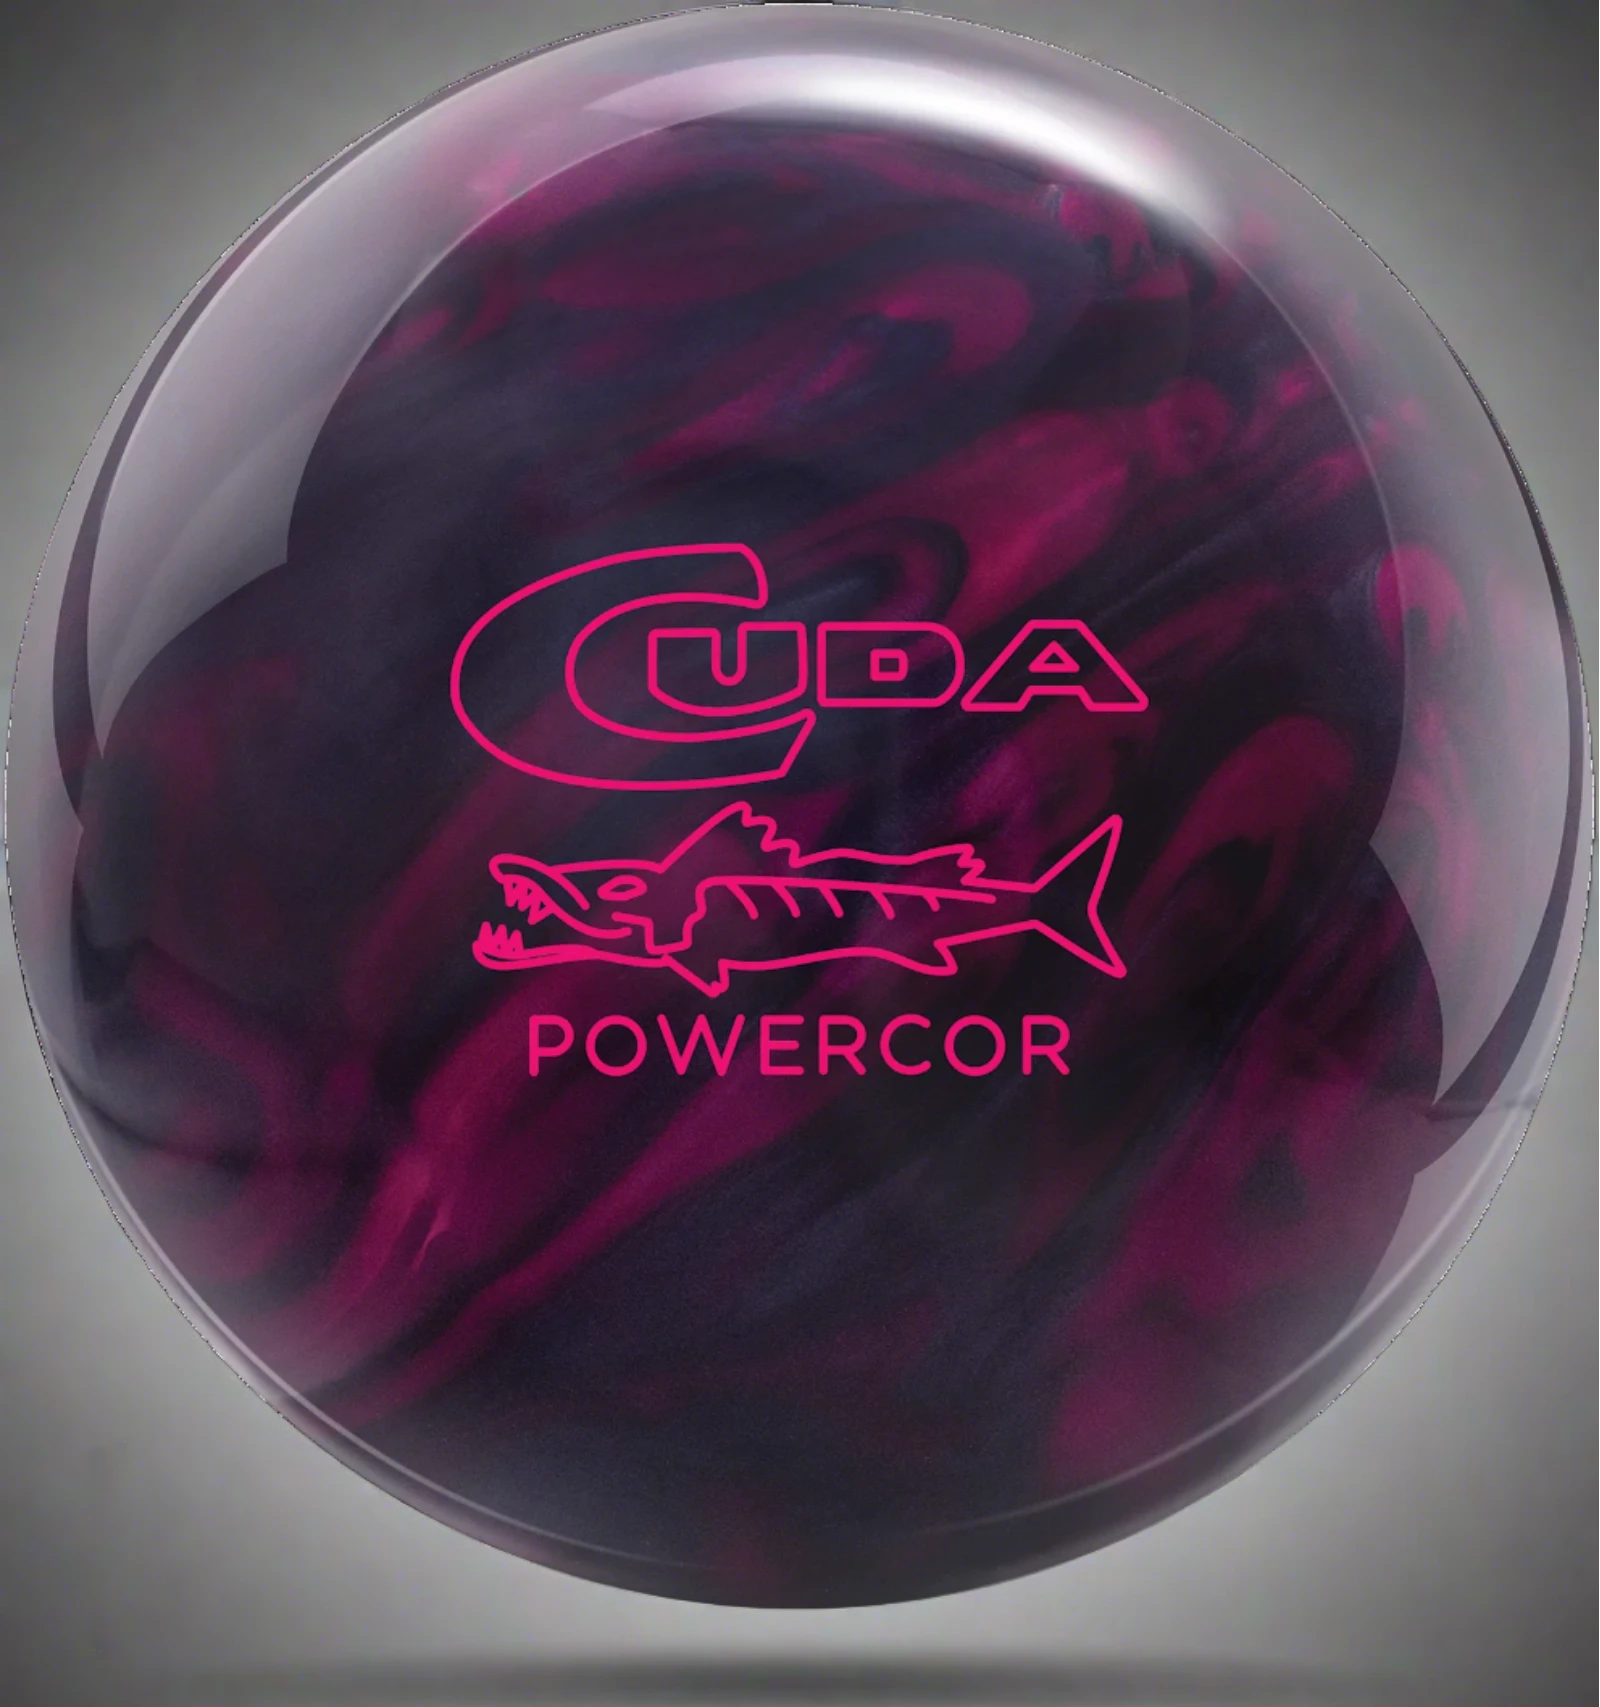 Columbia 300 Cuda PowerCOR Pearl